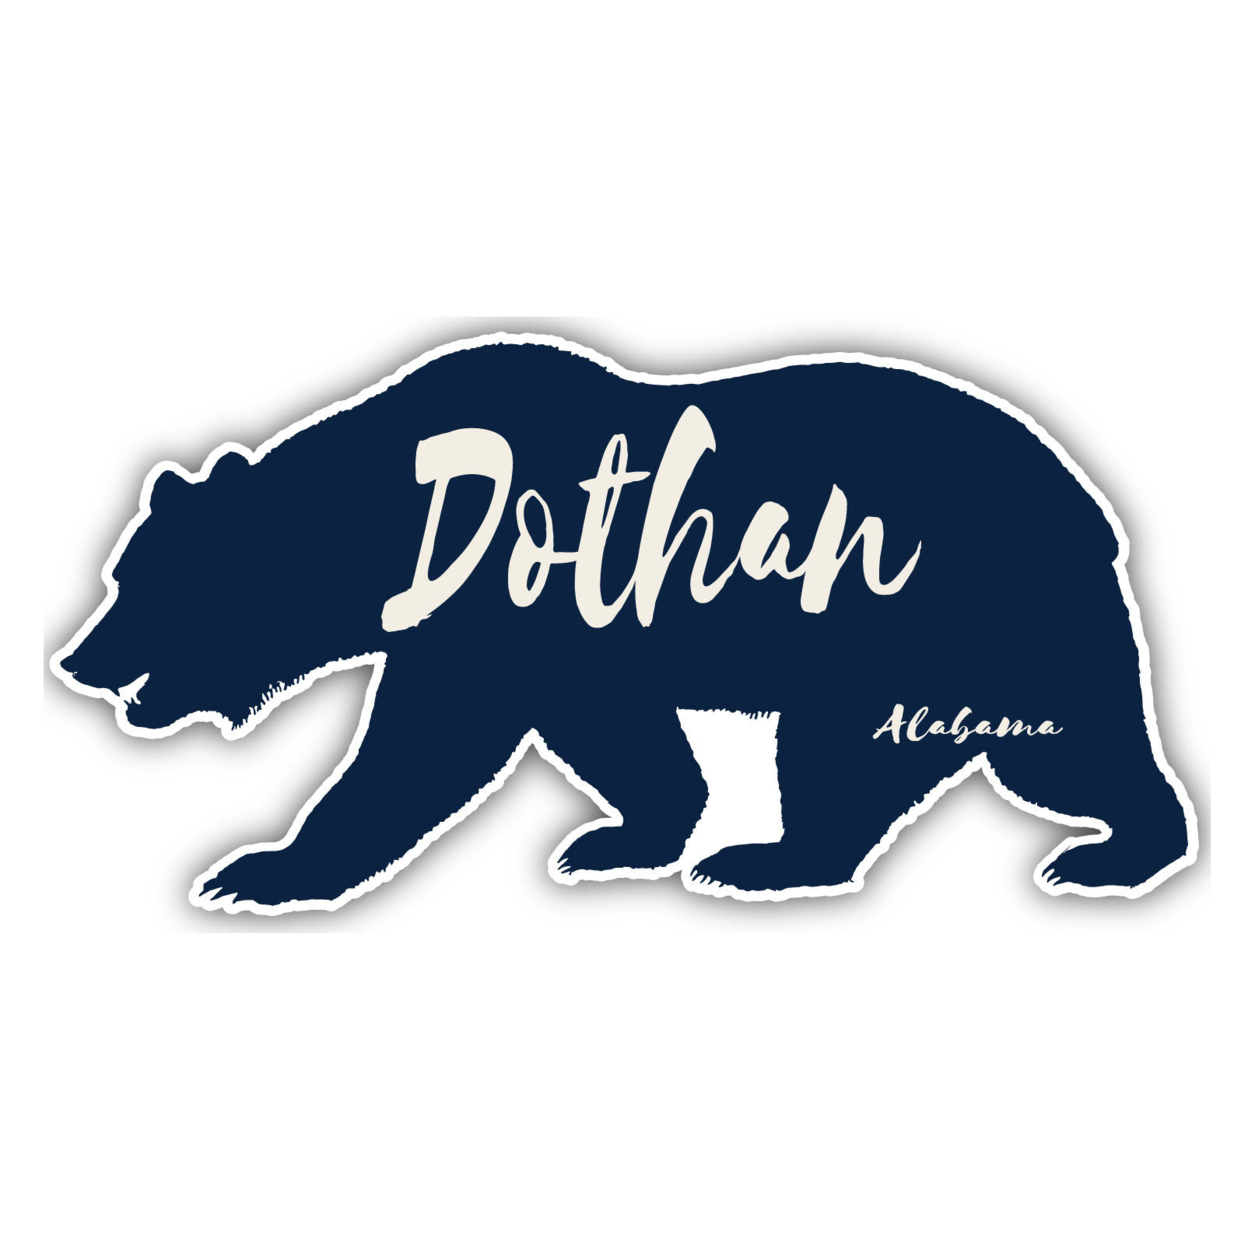 Dothan Alabama Souvenir Decorative Stickers (Choose Theme And Size) - 4-Pack, 12-Inch, Bear